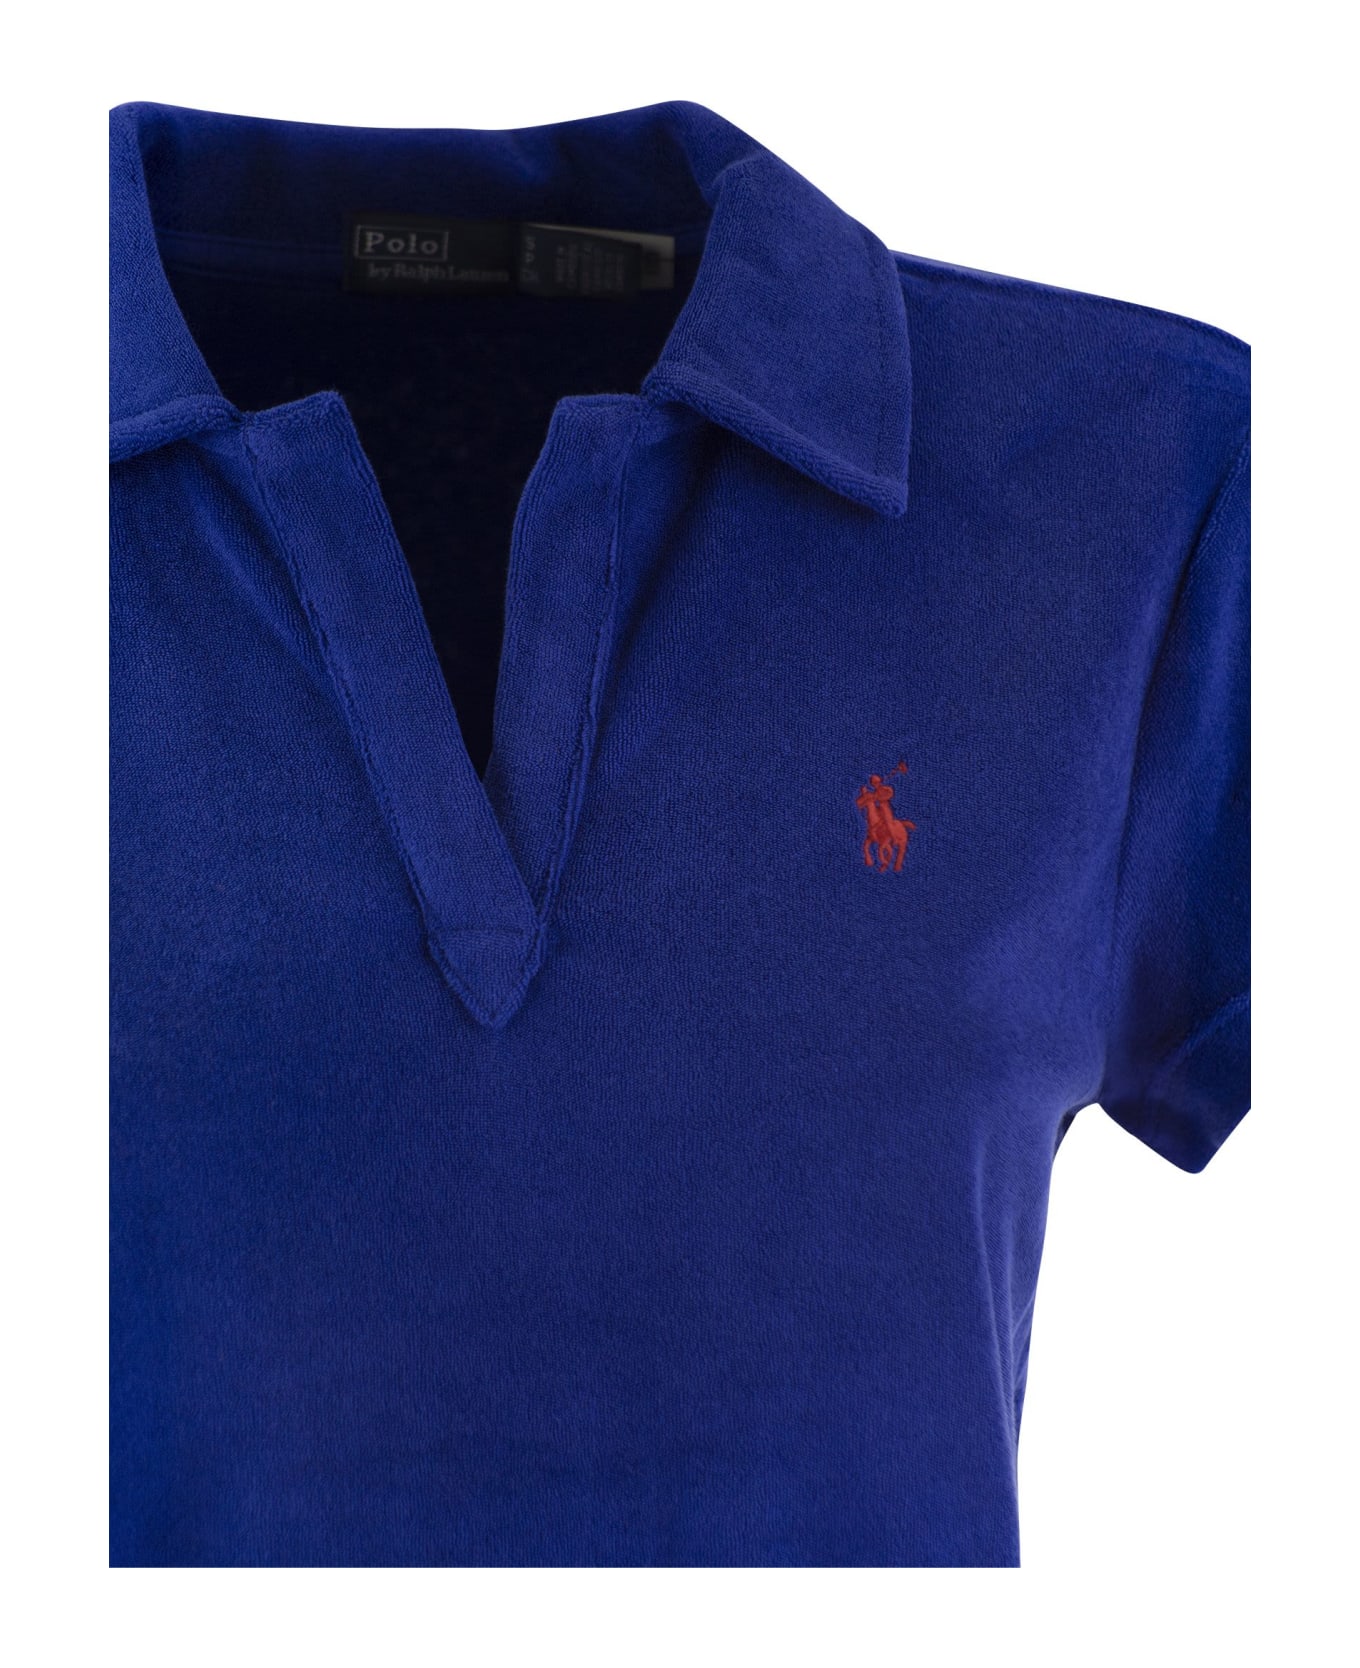 Polo Ralph Lauren Tight Terry Polo Shirt - Royal Blue ポロシャツ